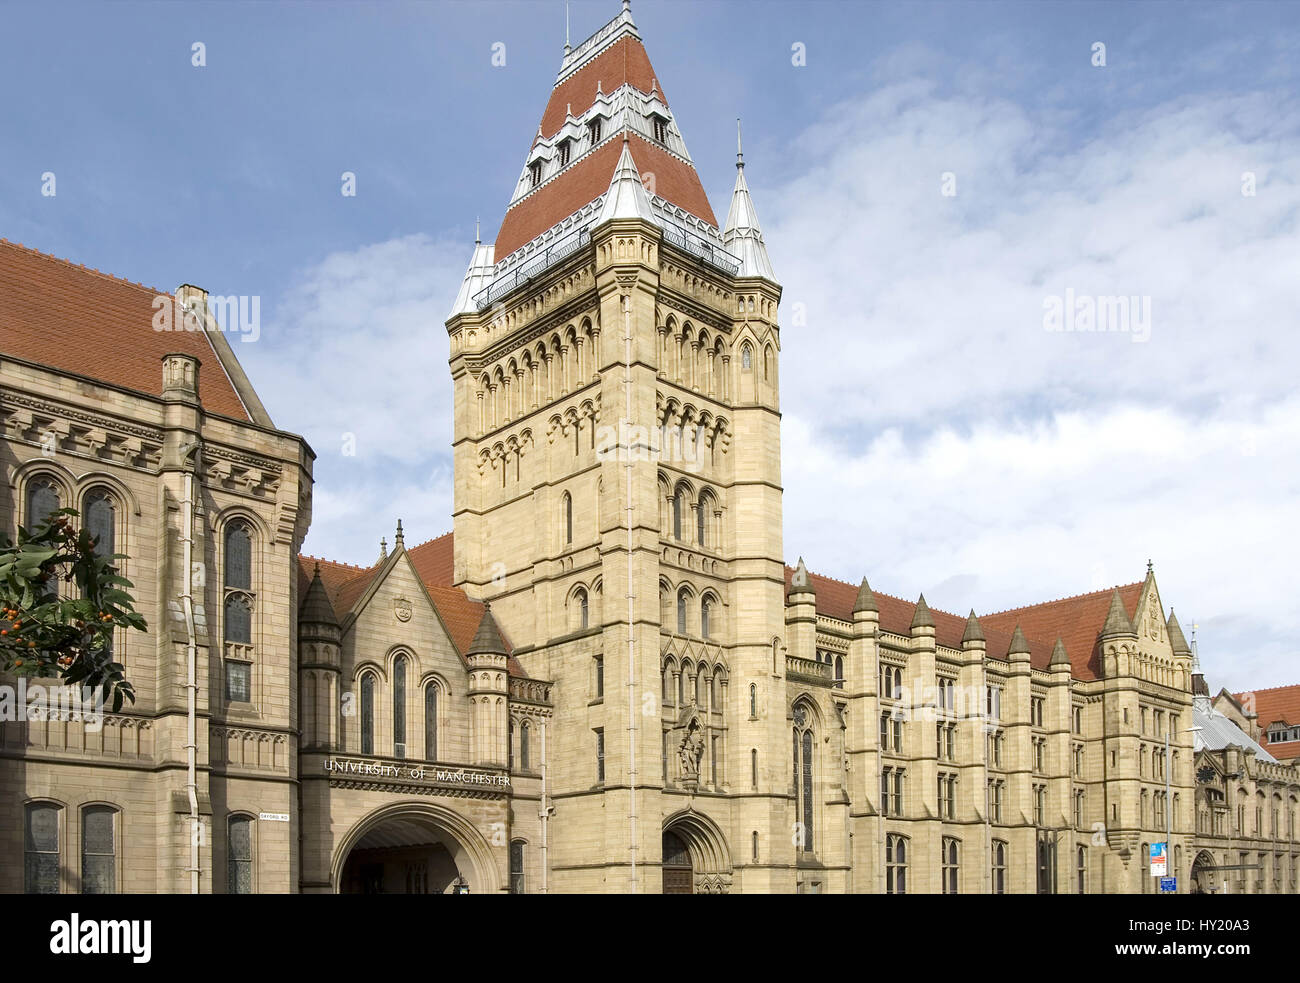 The Old Quadrangle Building of the University of Manchester.  Das Old Quadrangle Gebaeude der University of Manchester. Stock Photo